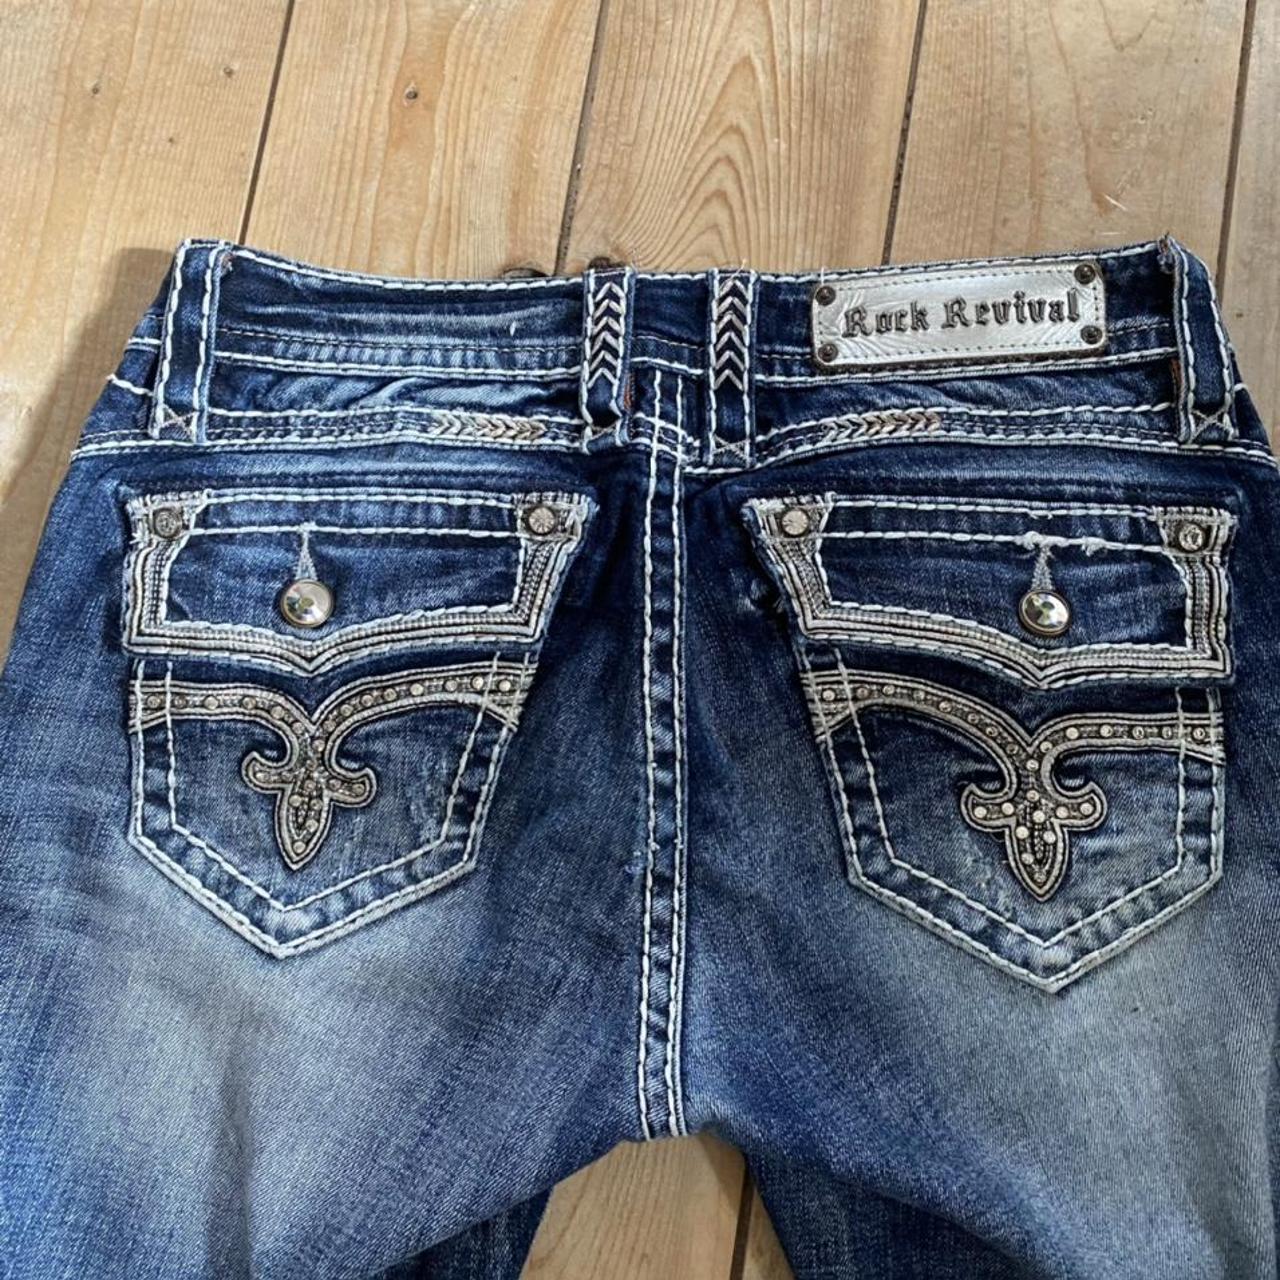 The pengest 90s rock revival bedazzled jeans, sister... - Depop